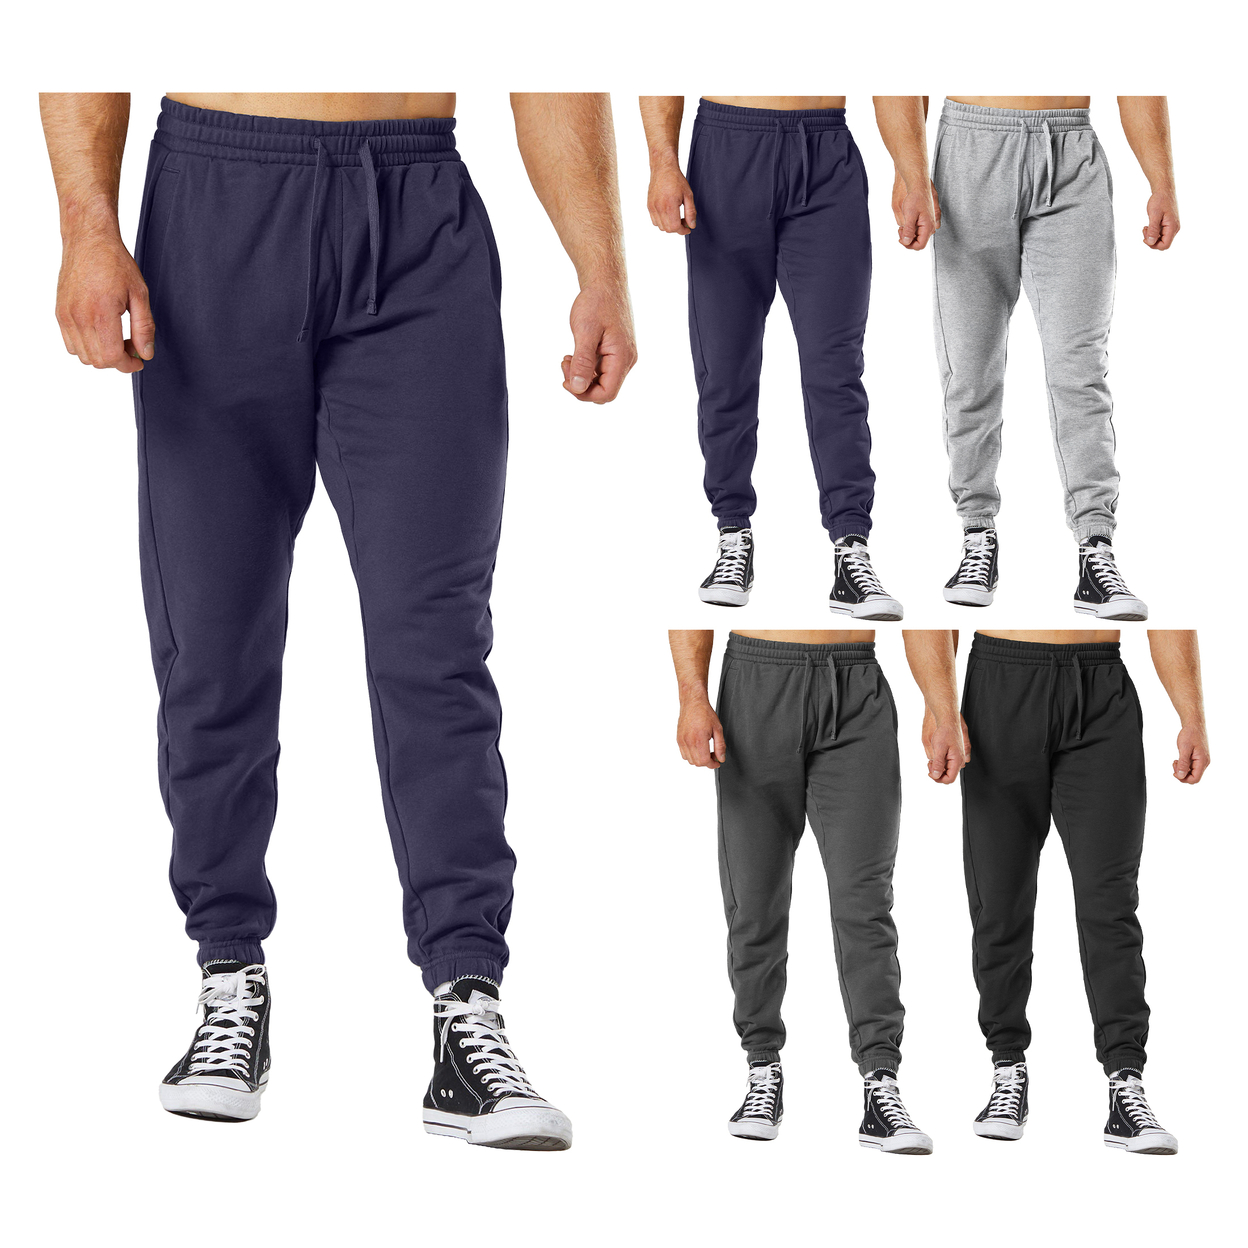 3-Pack: Men's Ultra-Soft Cozy Winter Warm Casual Fleece-Lined Sweatpants Jogger - Medium